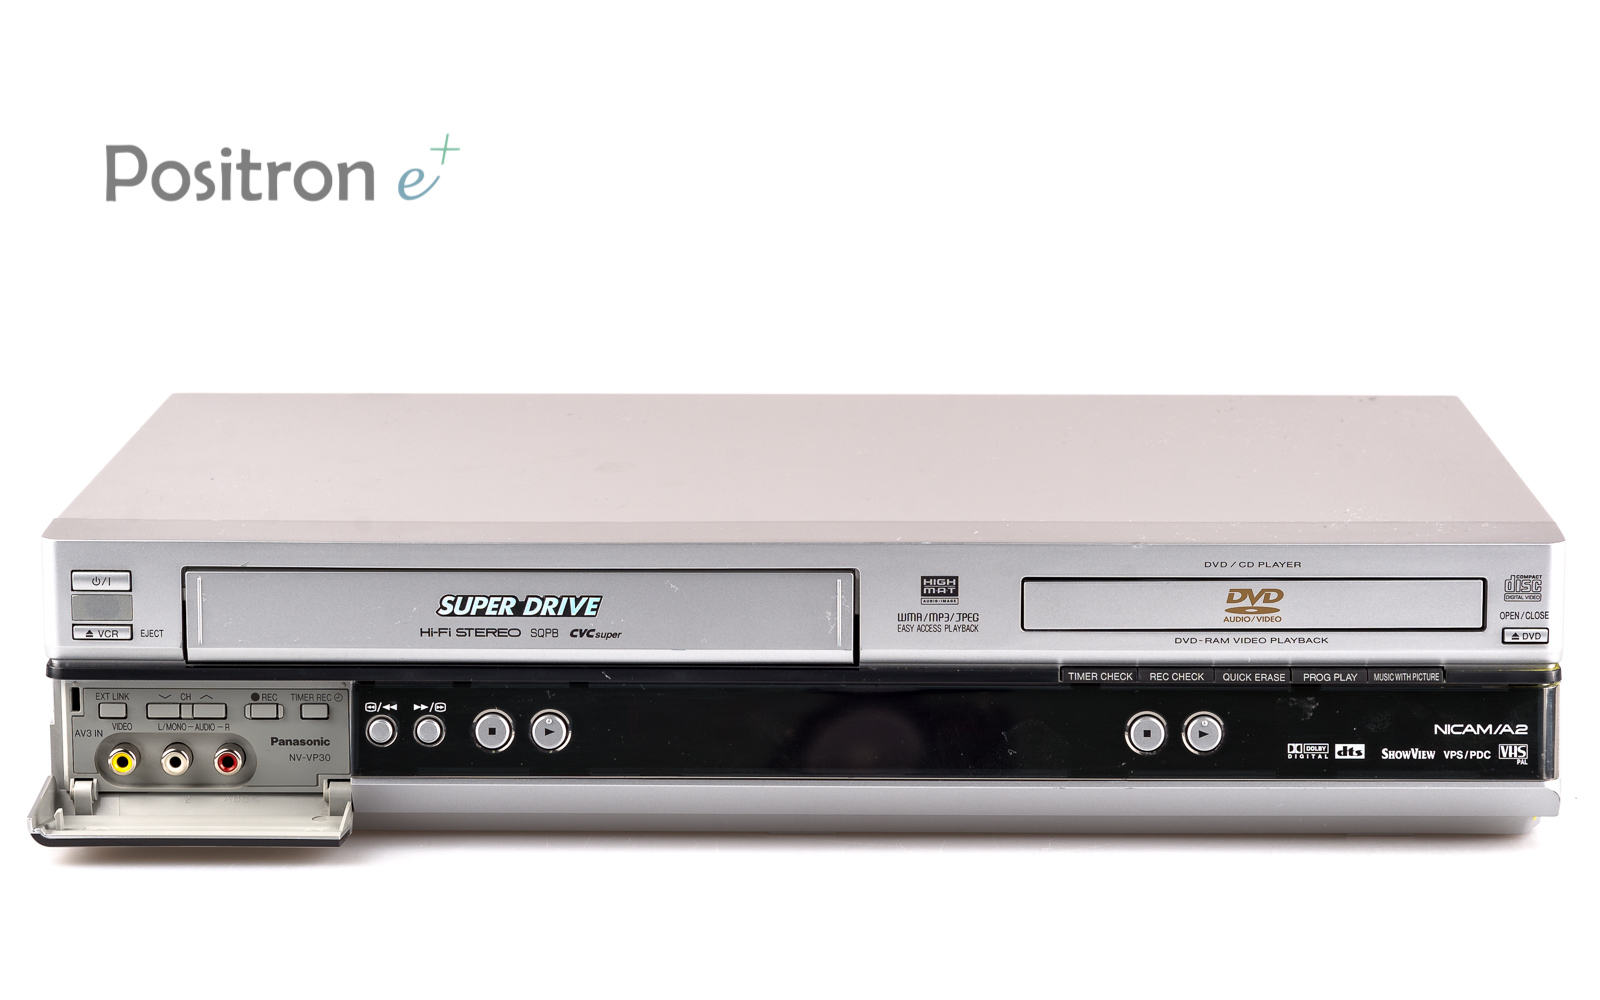 Chaise longue verzameling Beschaven Panasonic NV-VP30 DVD VHS Kombination | Positron-e